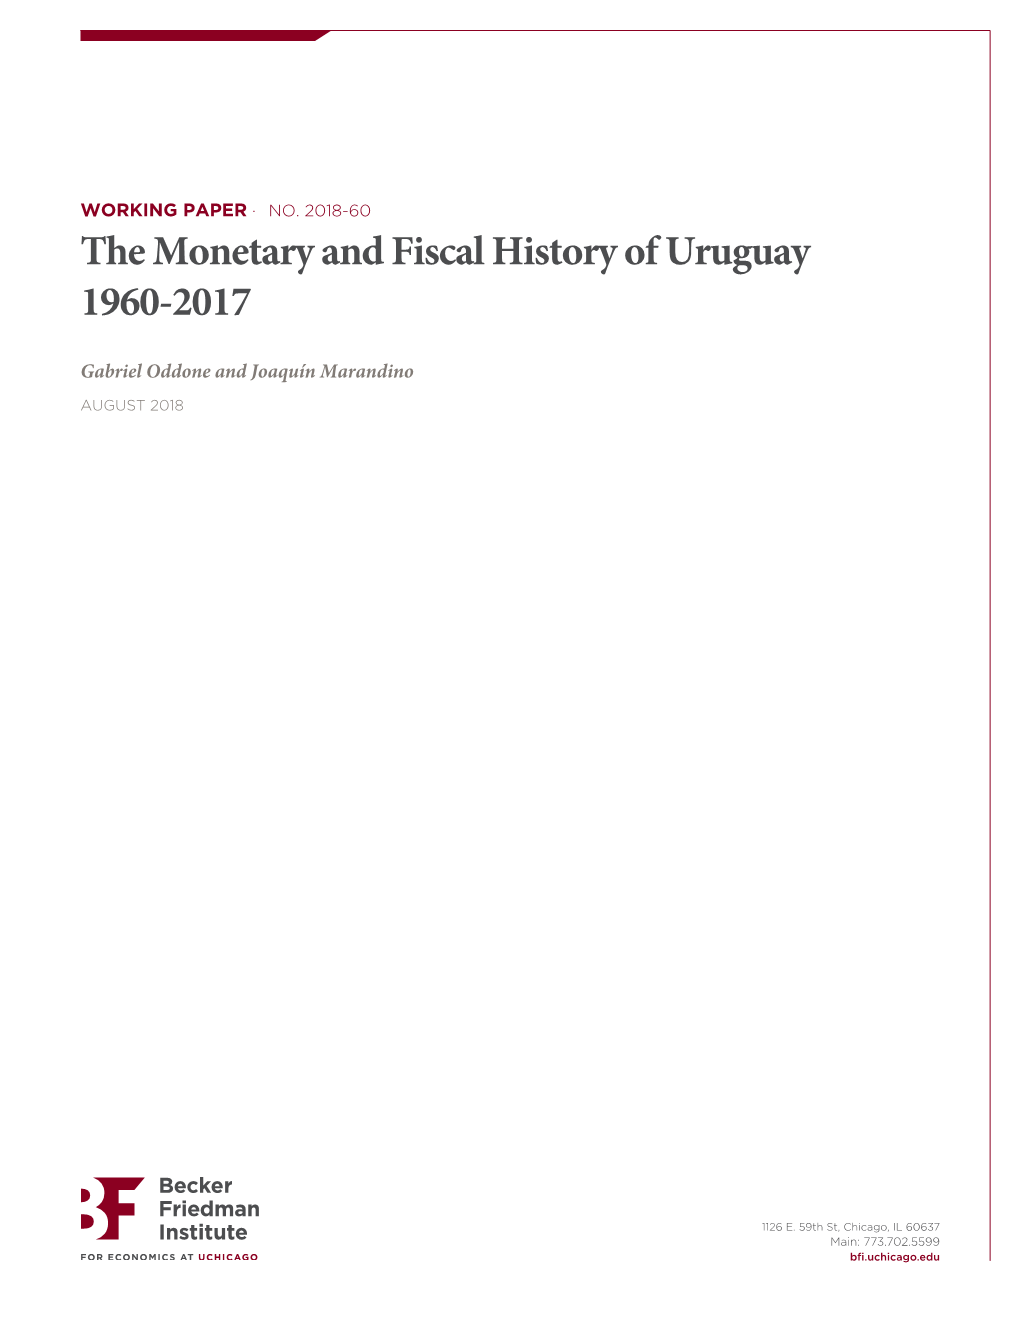 The Monetary and Fiscal History of Uruguay 1960-2017